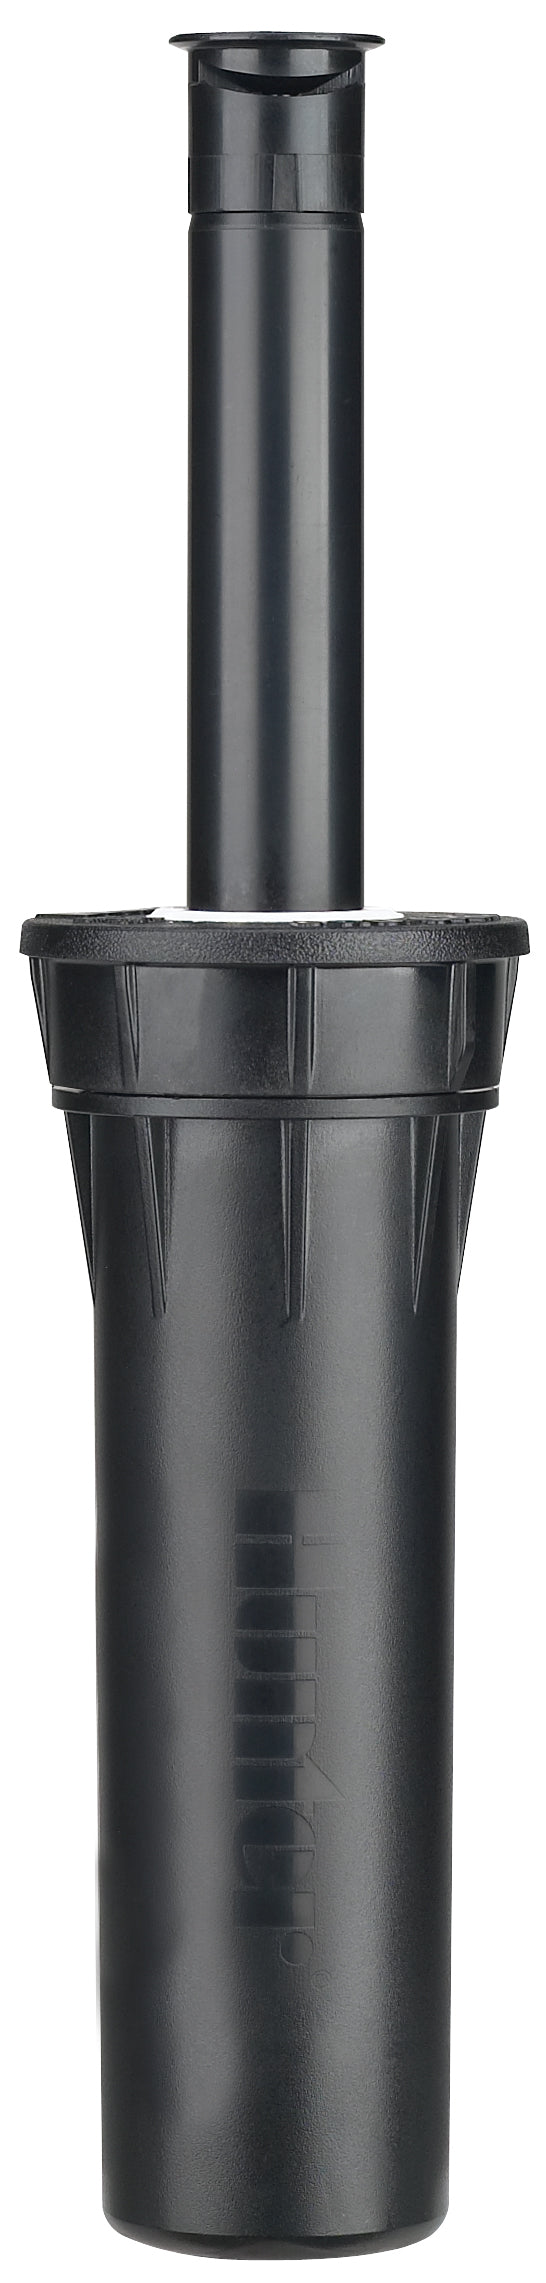 Hunter Pro Adjustable Spray Nozzles 1.2m